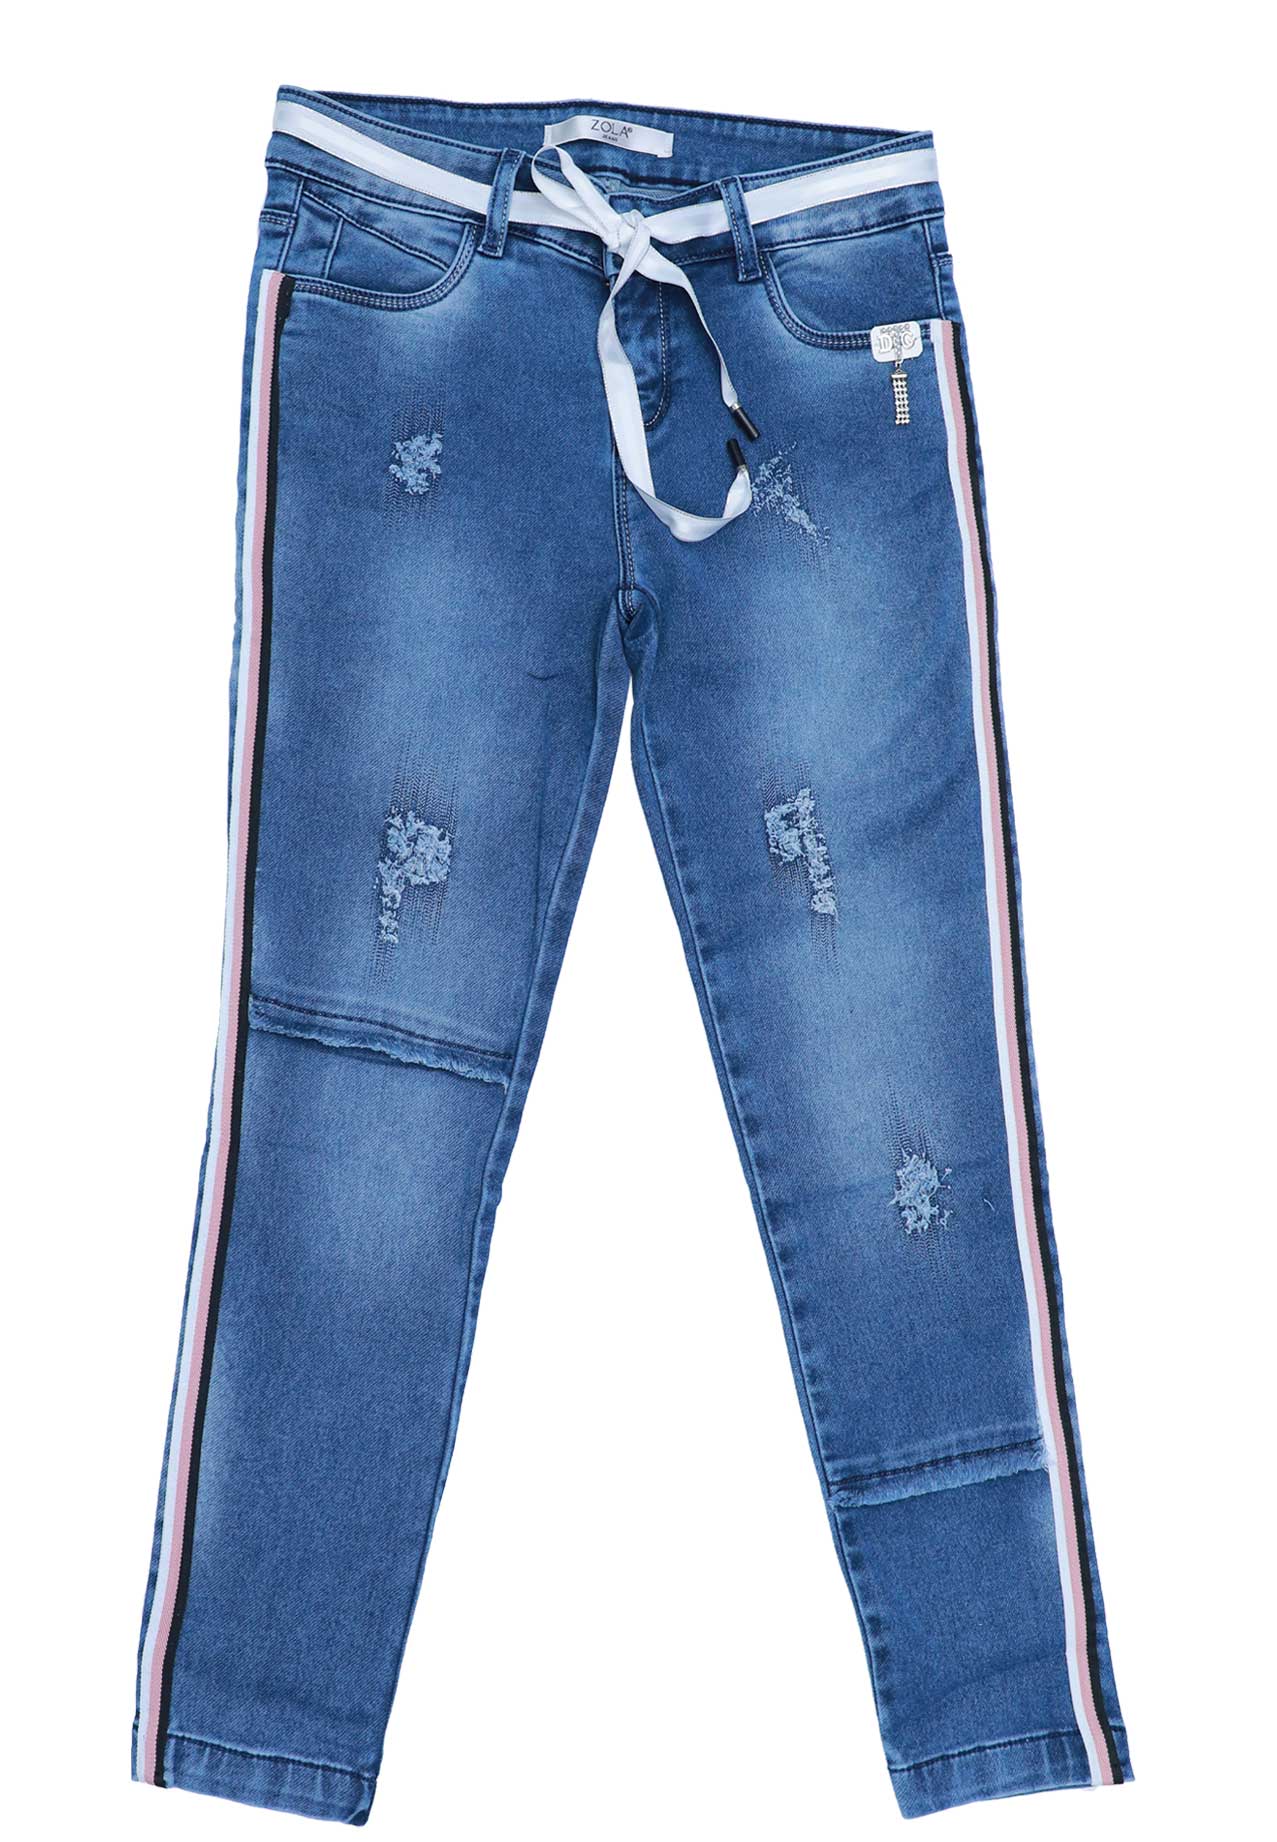 zola jeans price